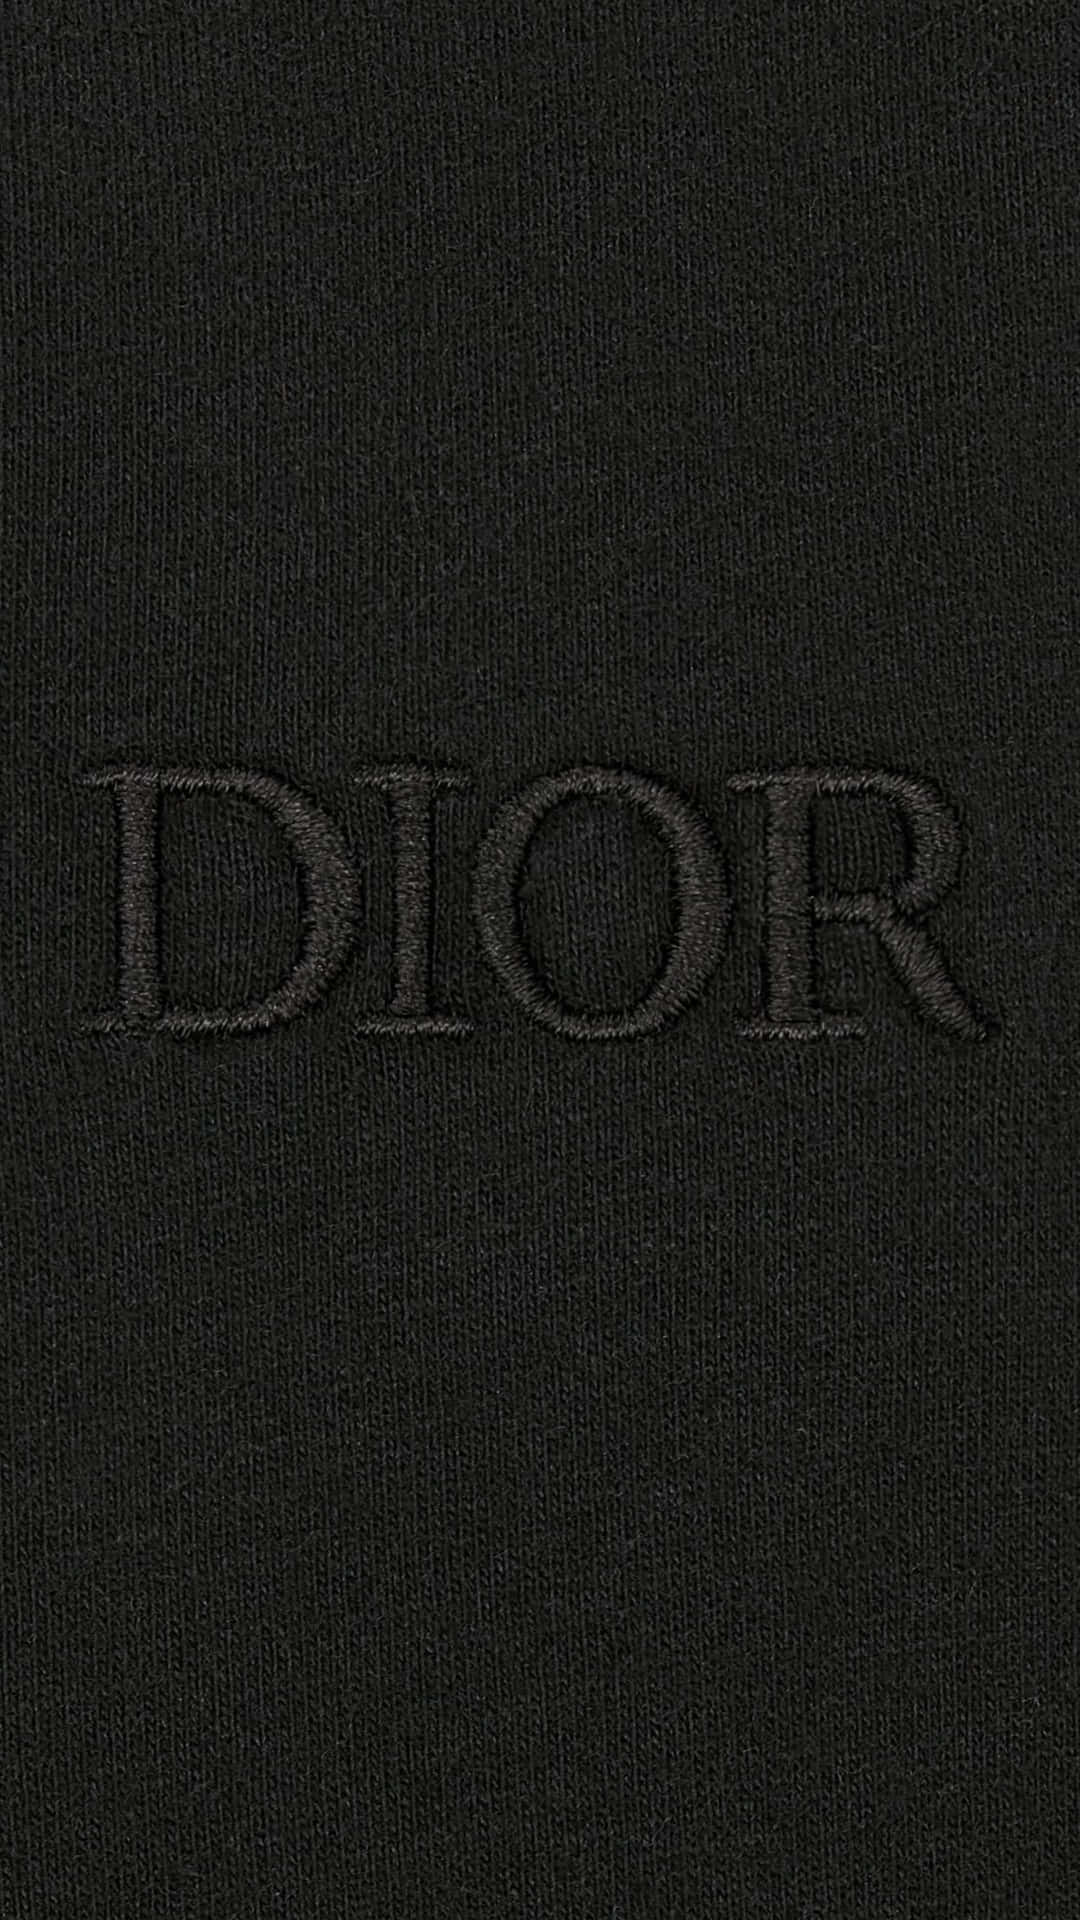 Dior Logo Embossed Black Texture Wallpaper